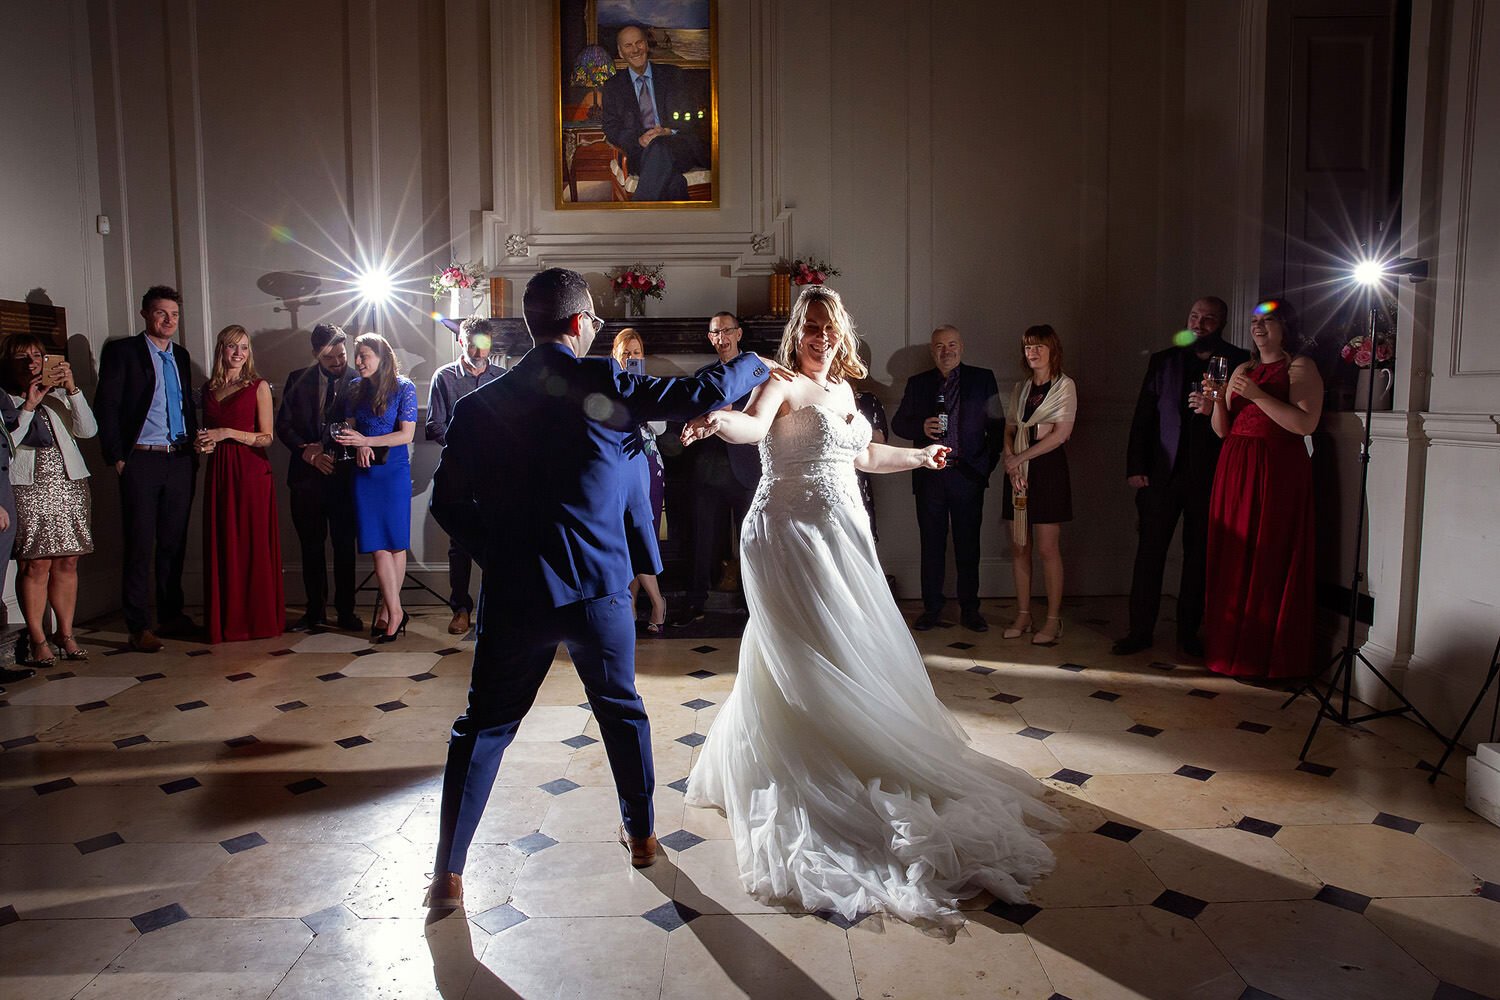 Chicheley Hall wedding photos (141).jpg